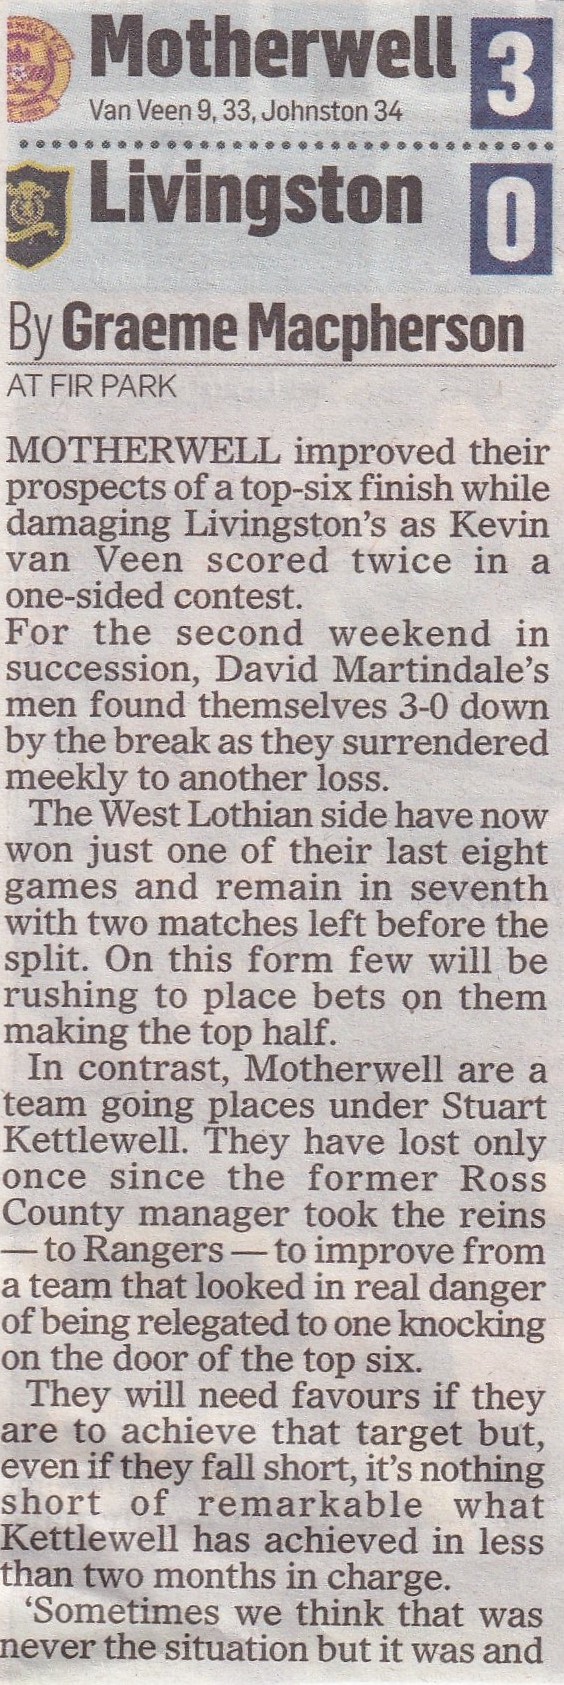 Motherwell versus Livingston Taboid Match Report